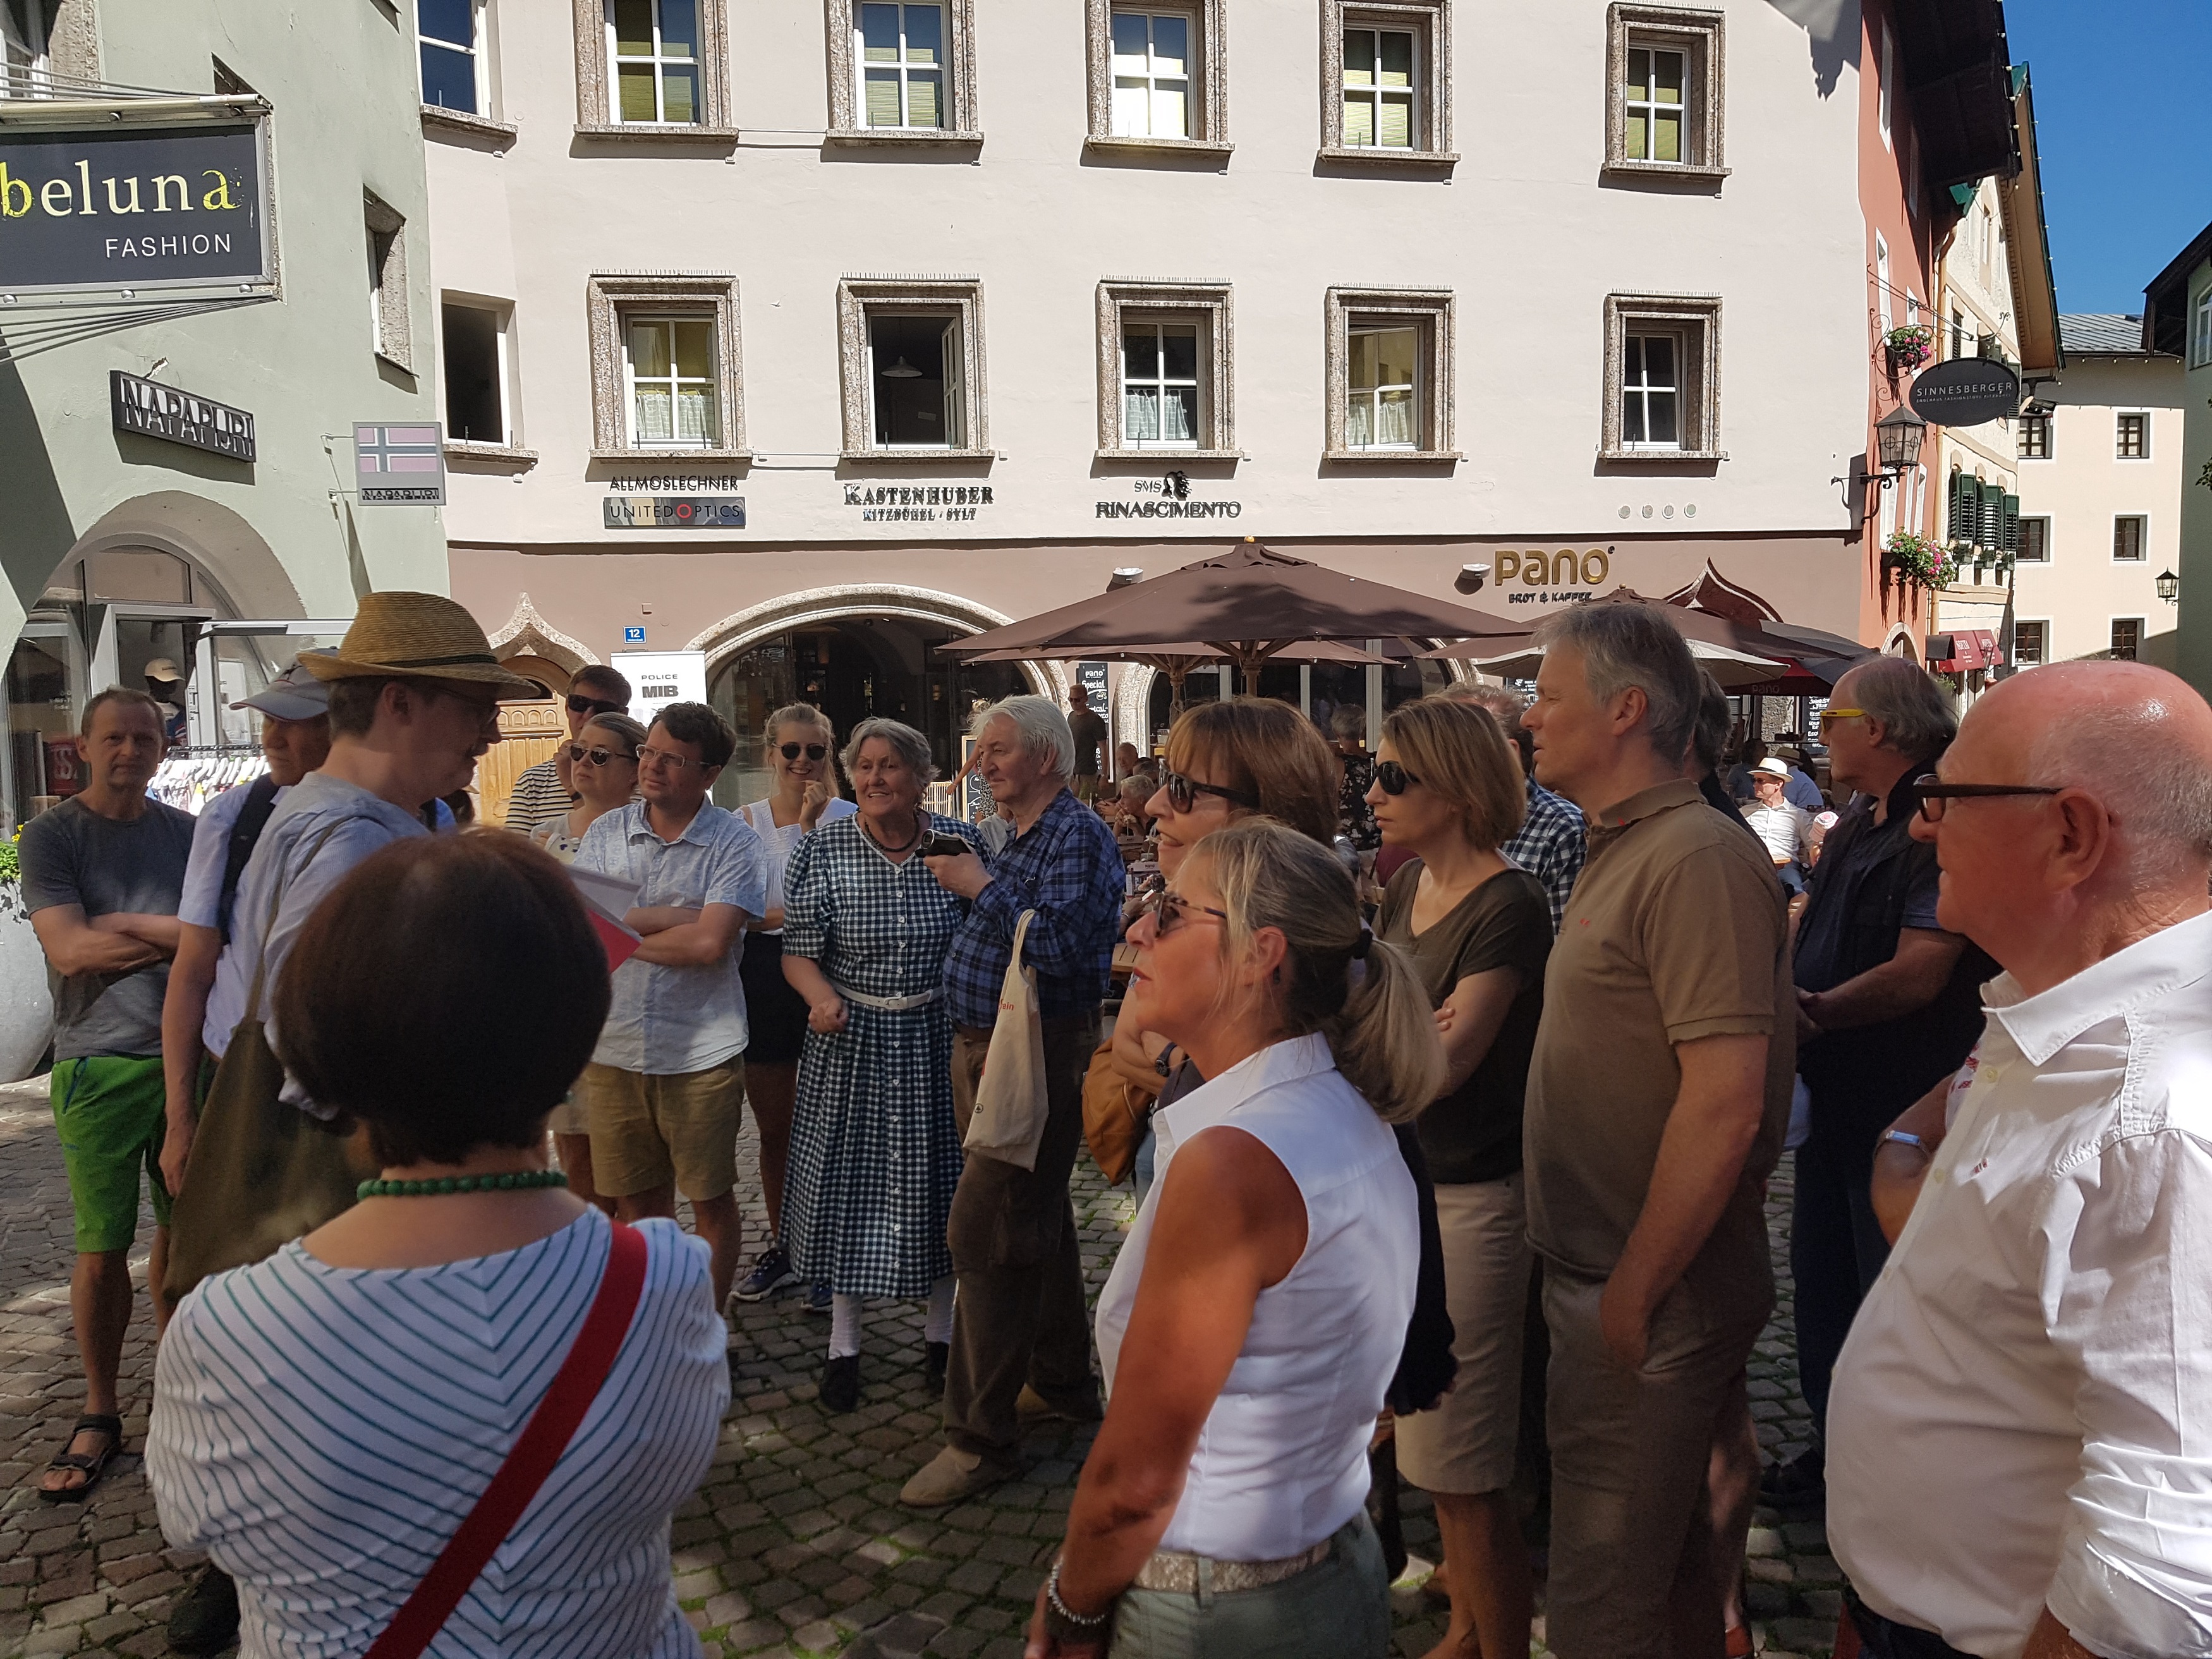 Kitzbühel. Porträts. In der Stadt. - Rundgang mit OSR Hans Wirtenberger & Dr. Helmuth Oehler am 29.06.2019. Foto: Dr. Wido Sieberer, Kitzbühel.